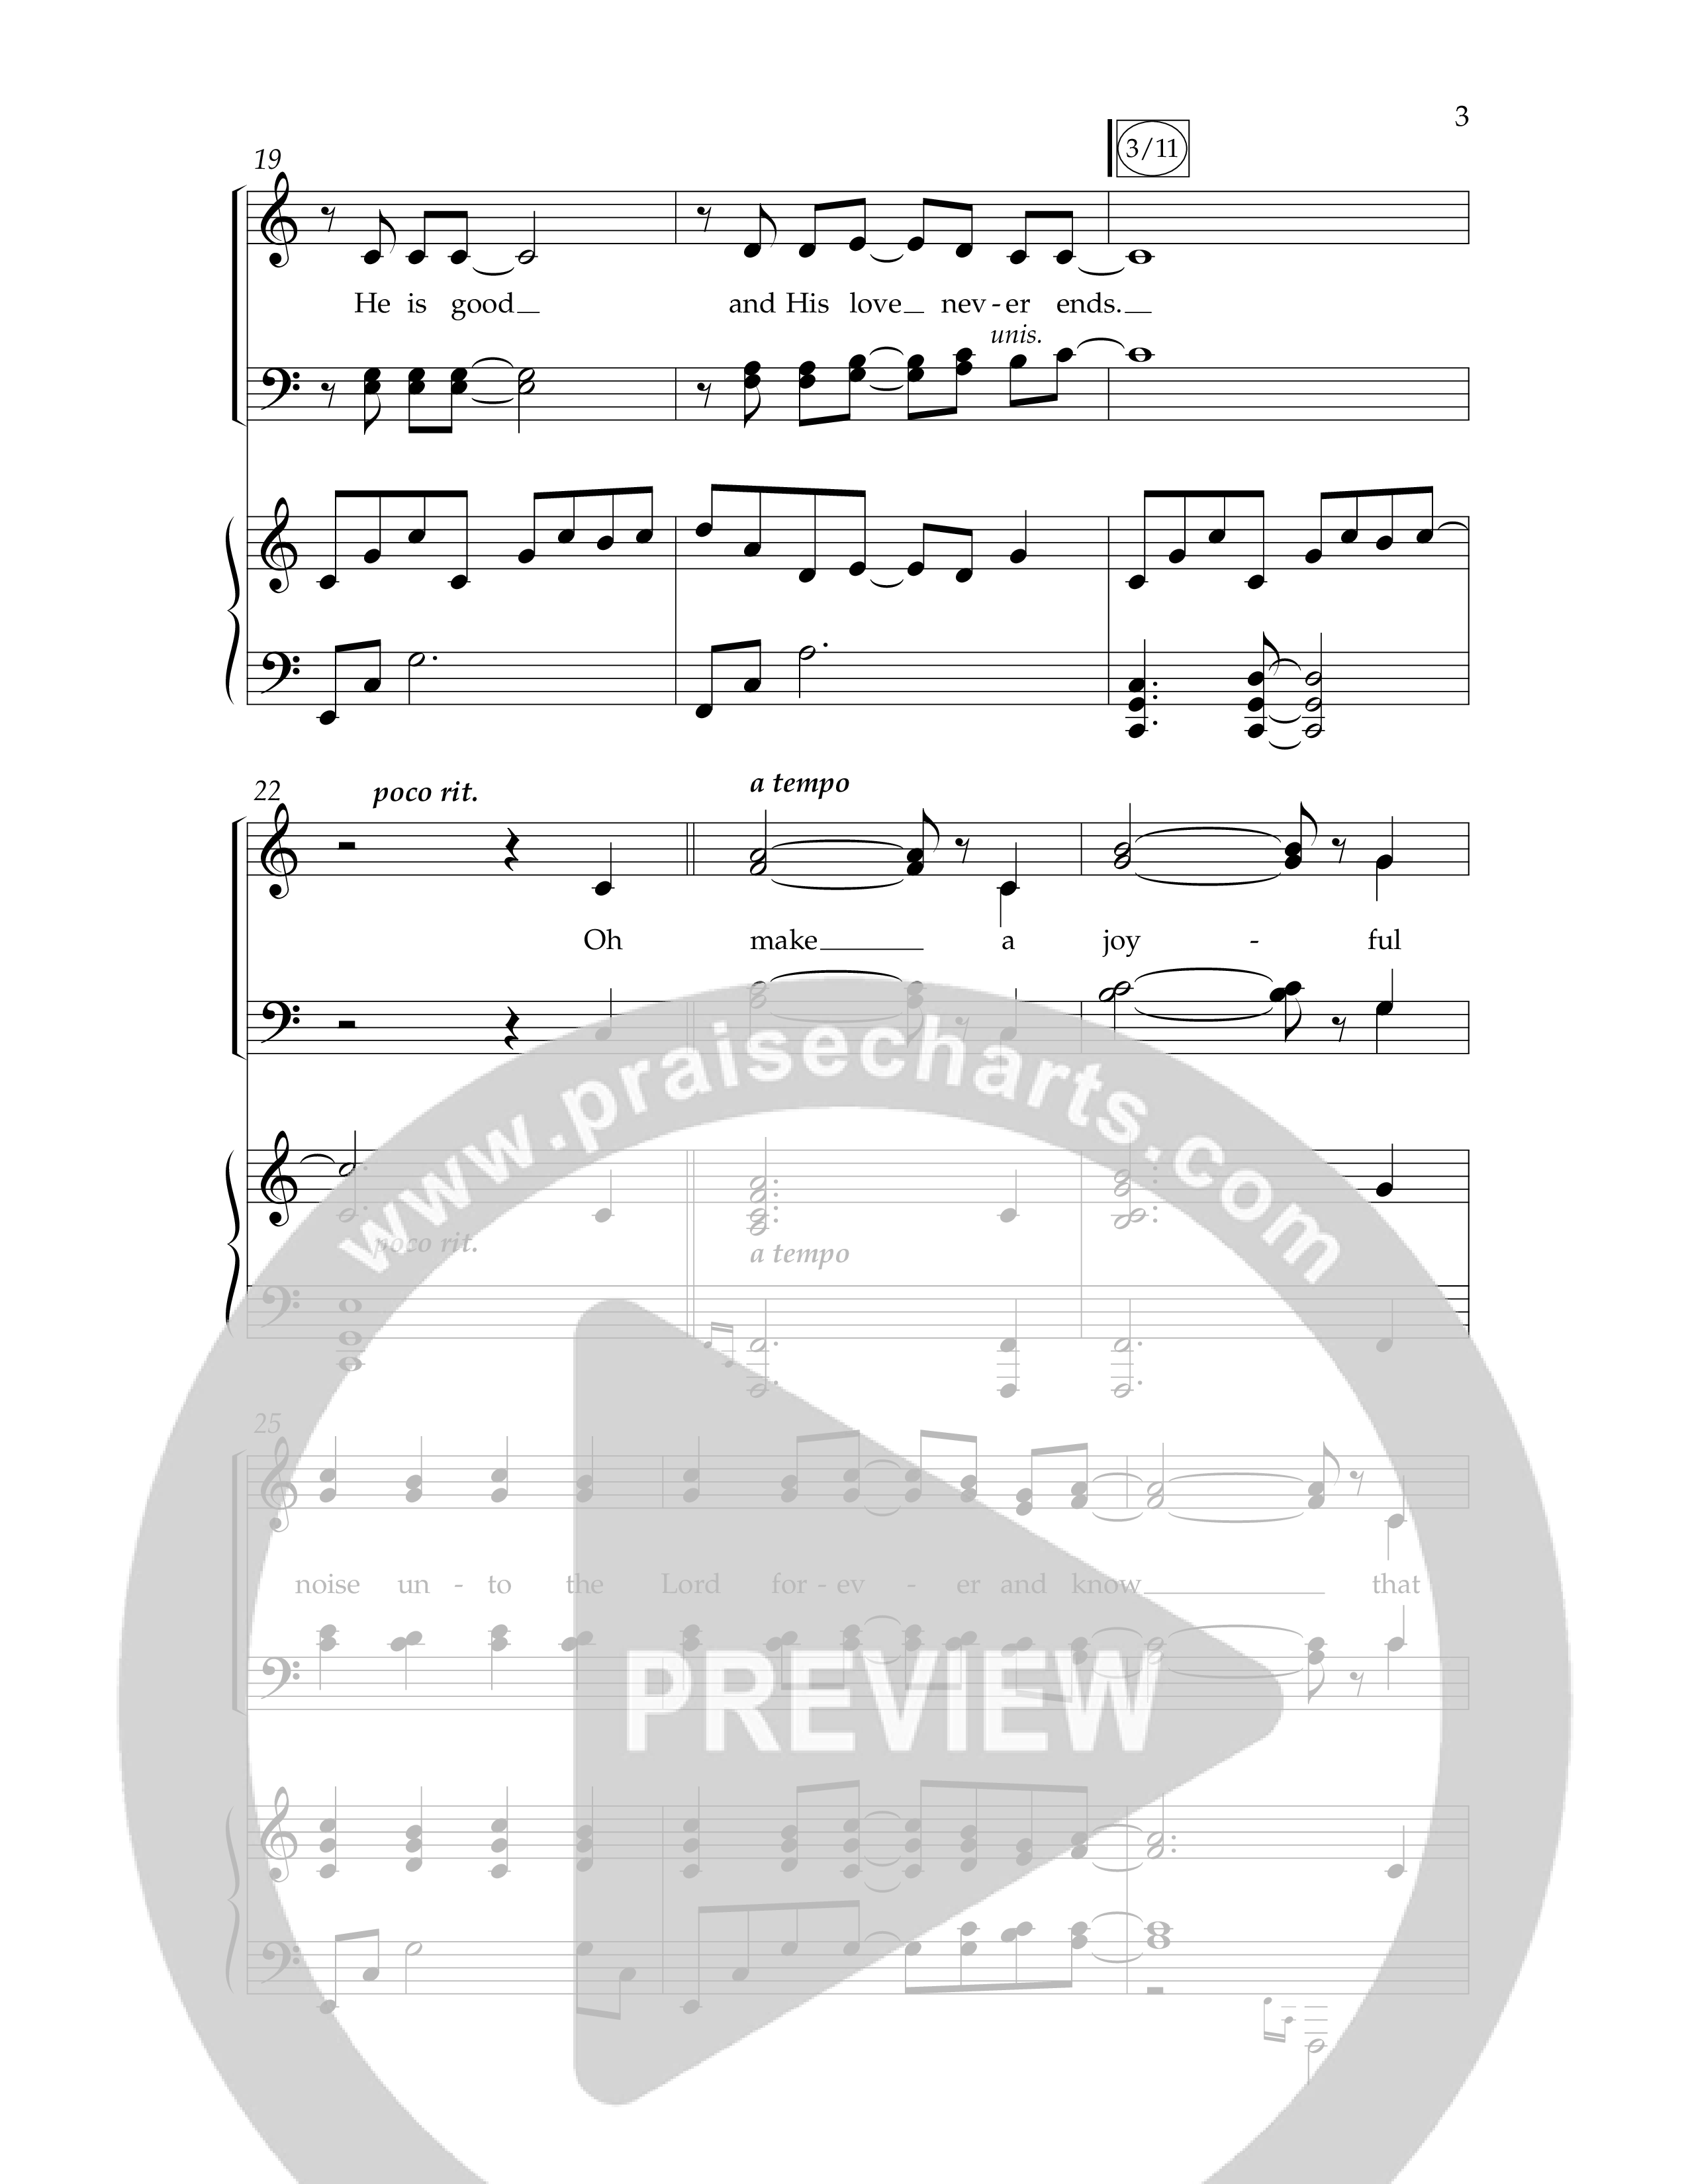 Enter In (Choral Anthem SATB) Anthem (SATB/Piano) (Lifeway Choral / Arr. Phillip Keveren)